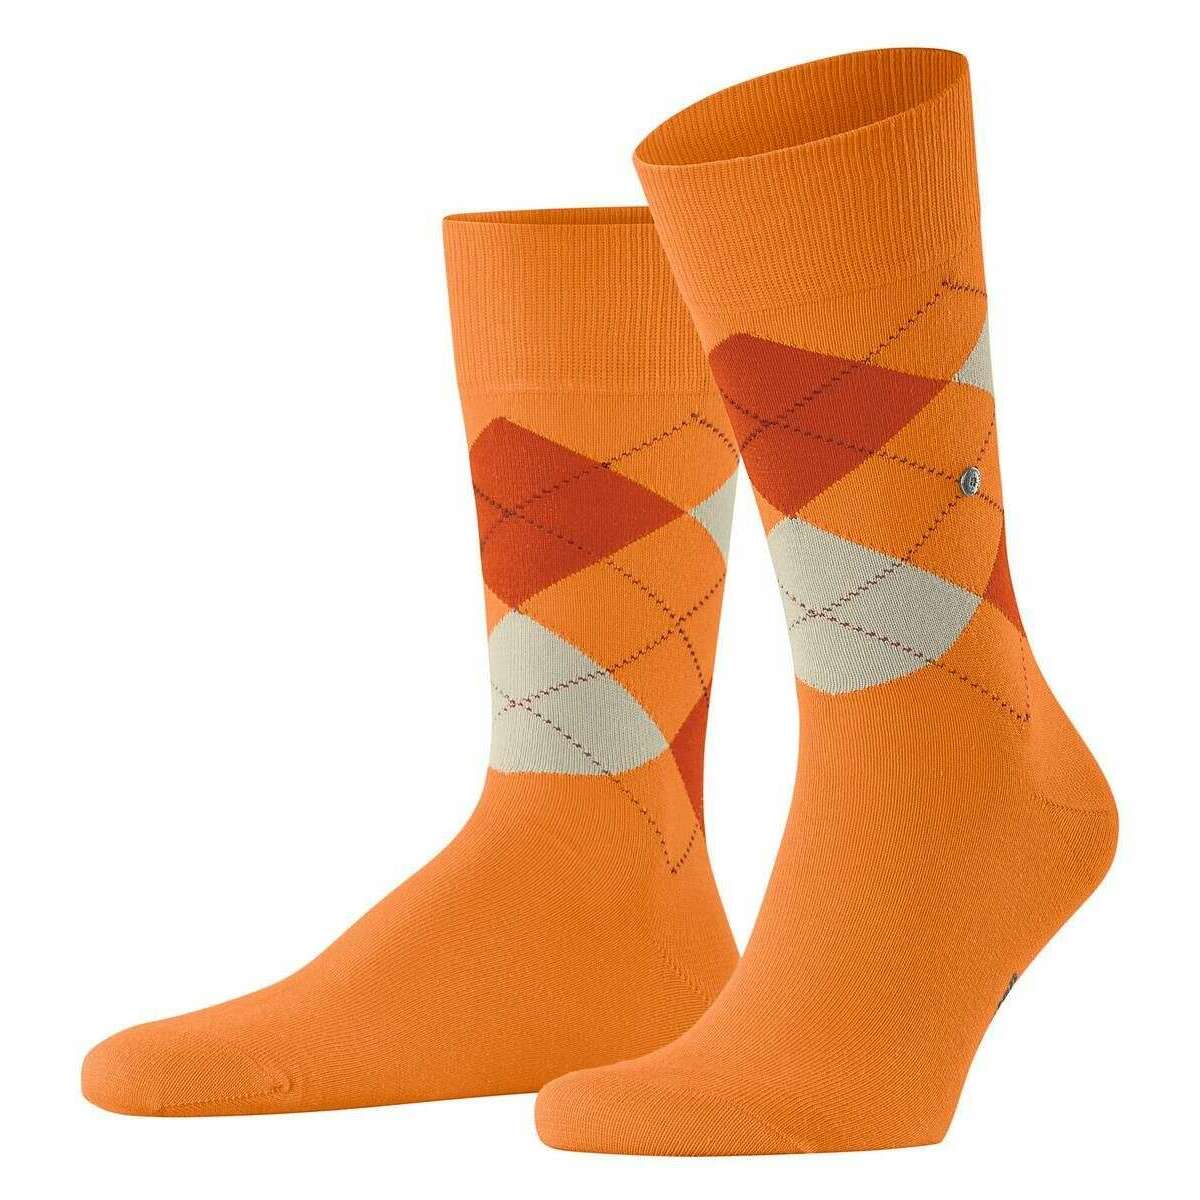 Burlington King Socks - Mandarin Orange